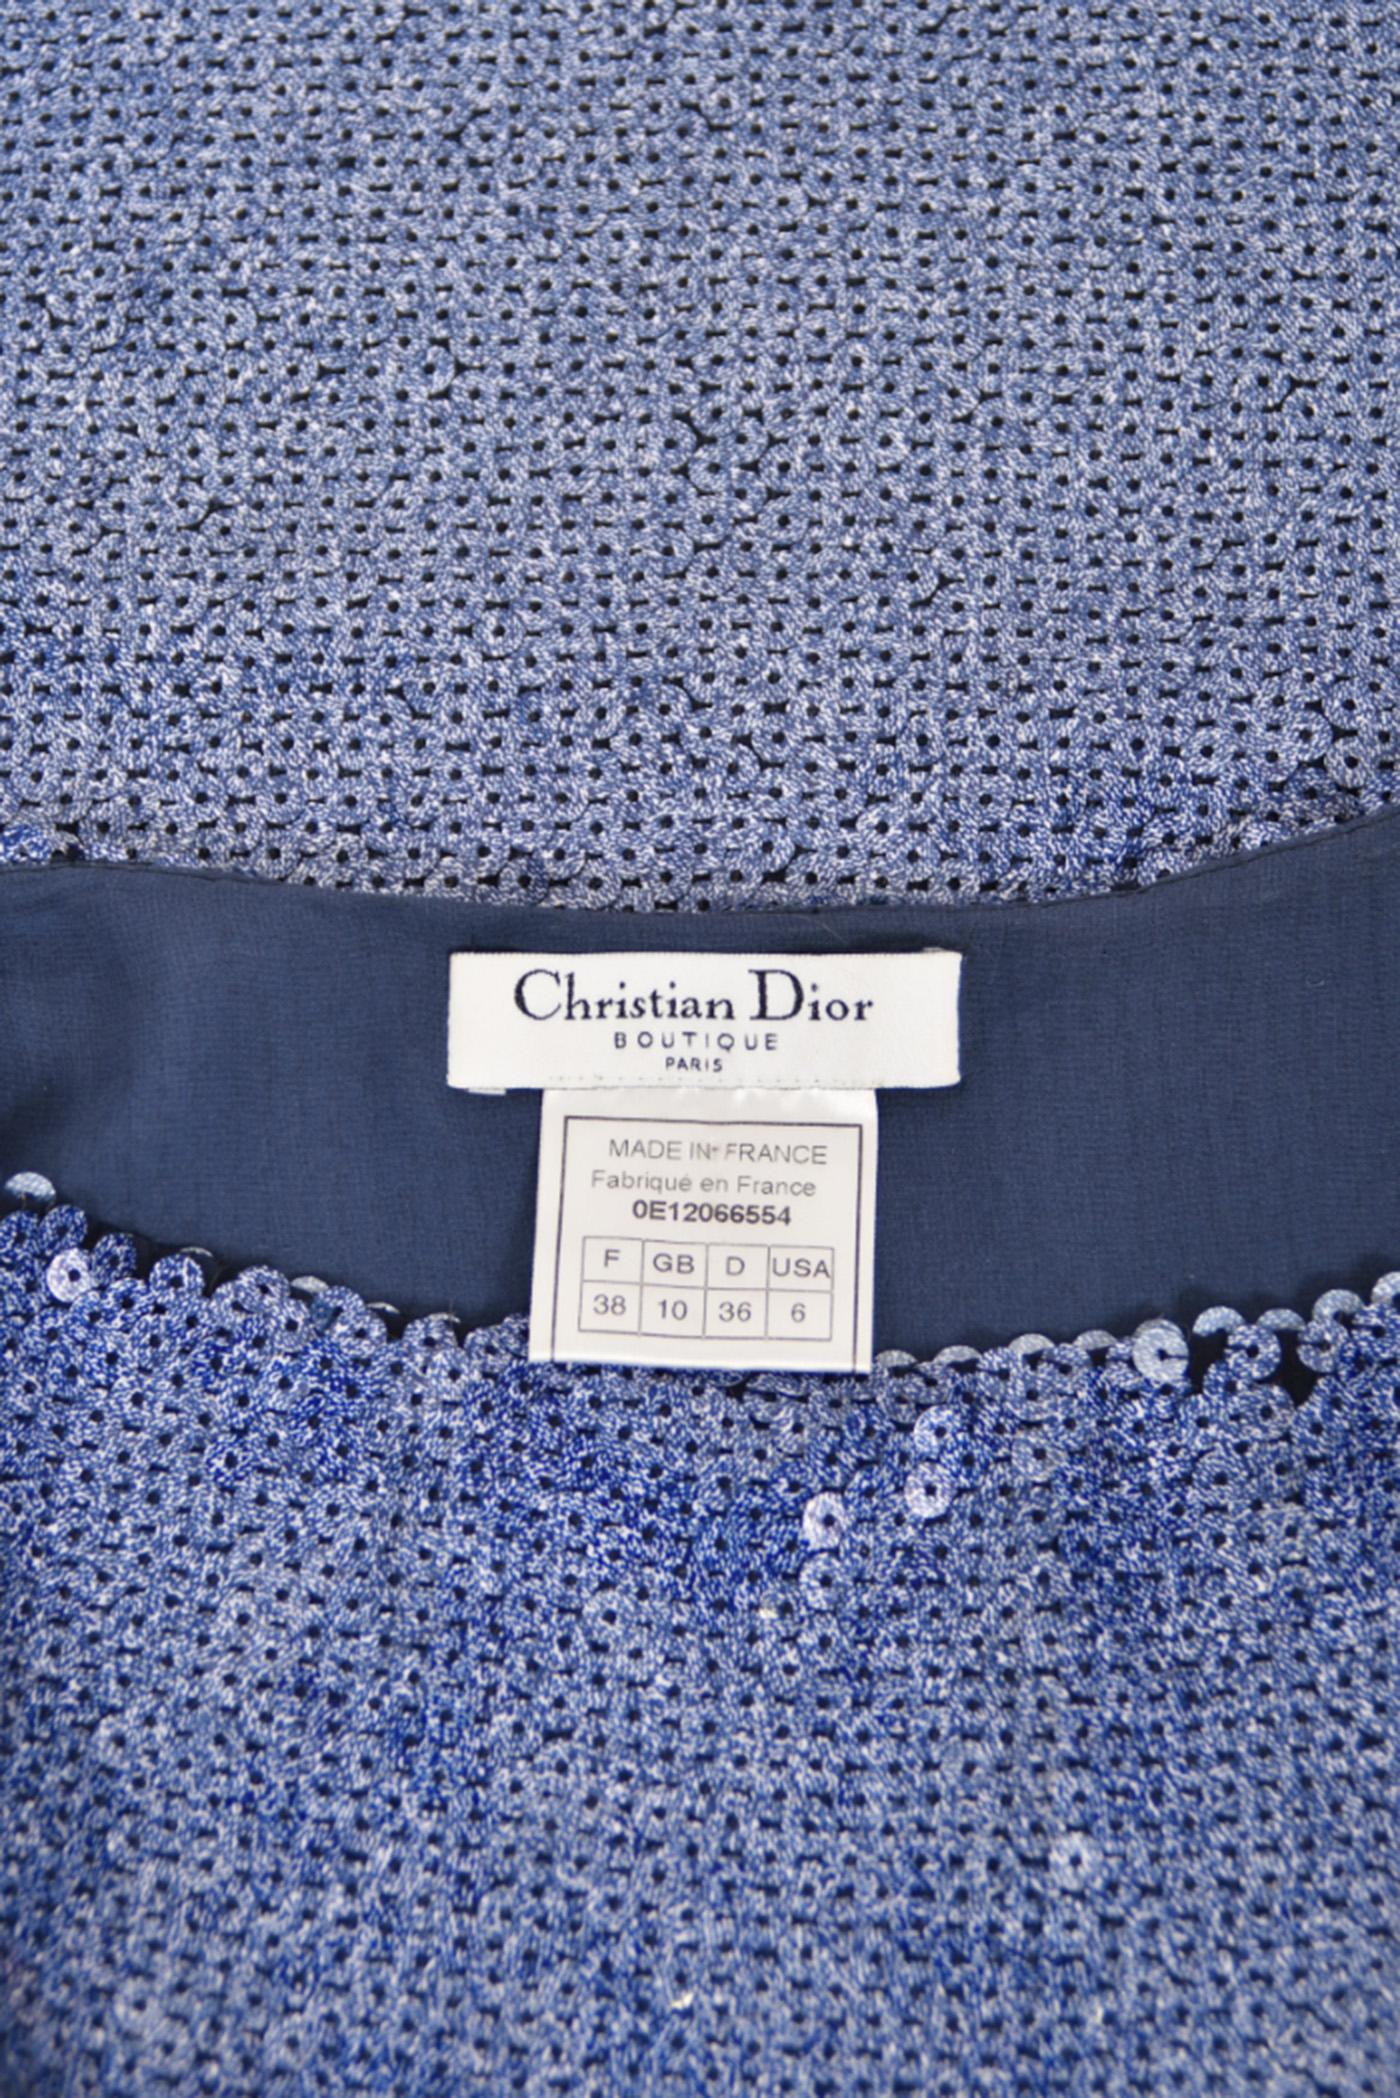 2000 Christian Dior by John Galliano Fully-Sequin Ocean Blue Bias-Cut Slip Gown  13